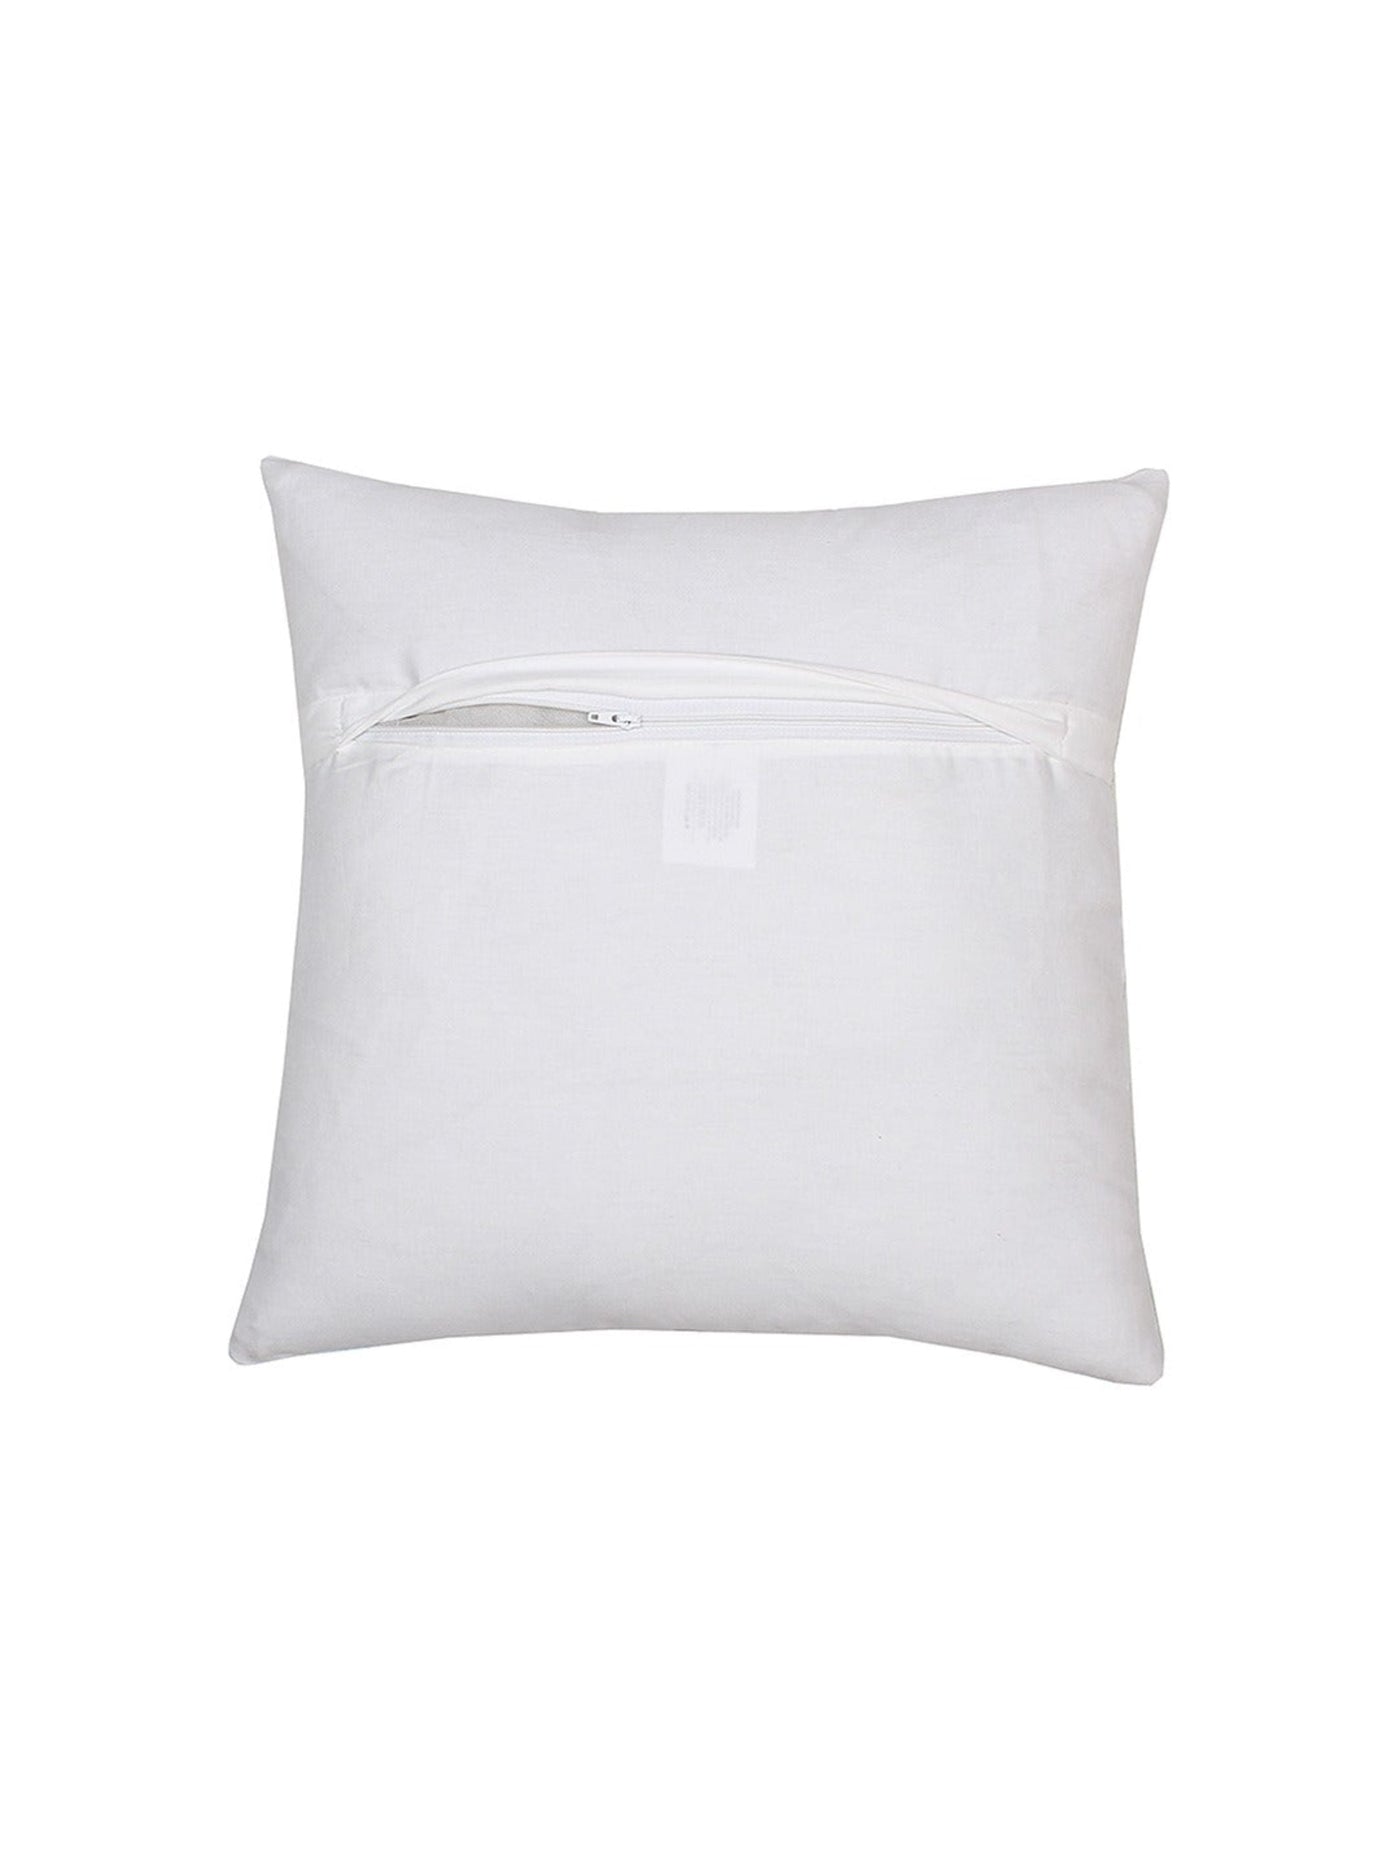 2 Cushion Covers - 2 s-8903773000821